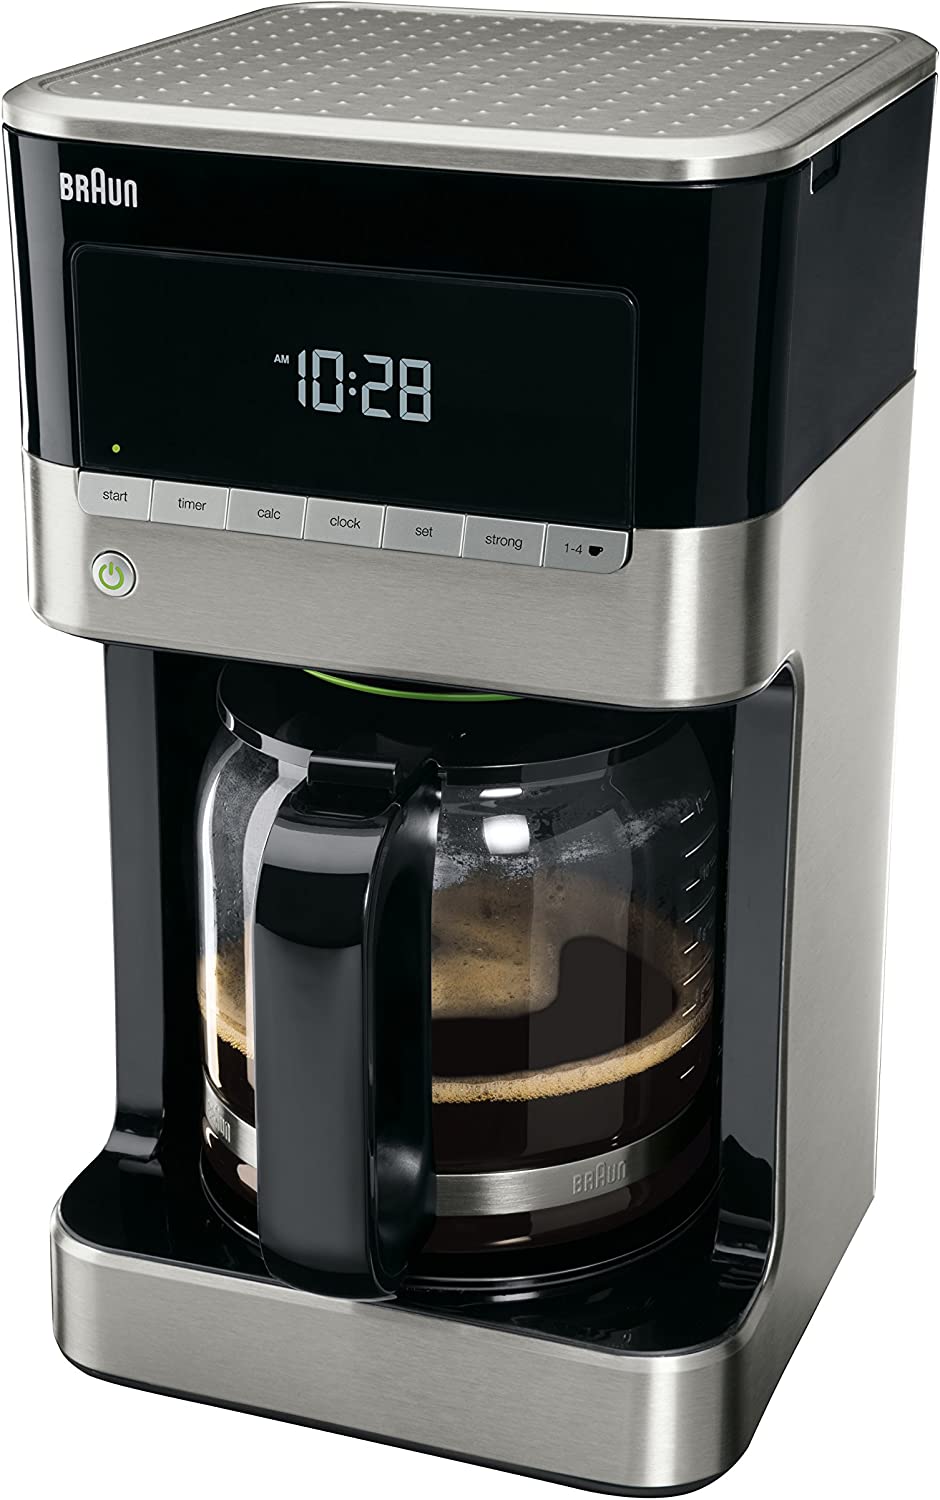 Braun Filter Drip Coffee Maker, 12 Cup (Black)